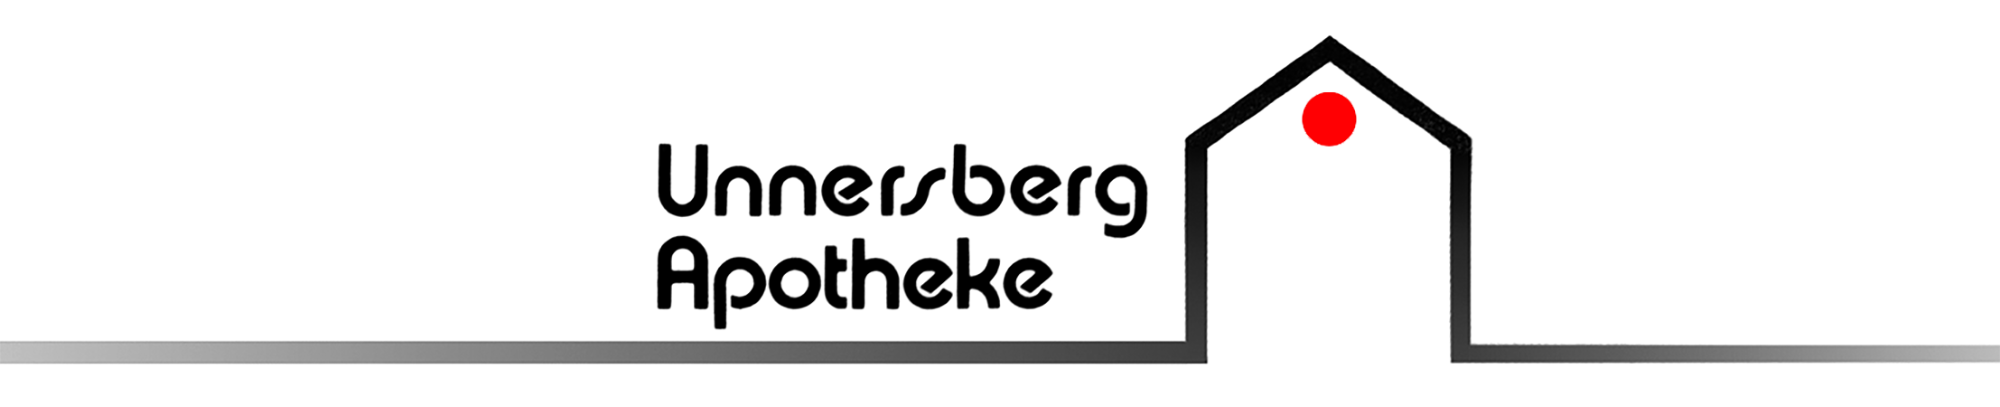 Unnersberg Logo